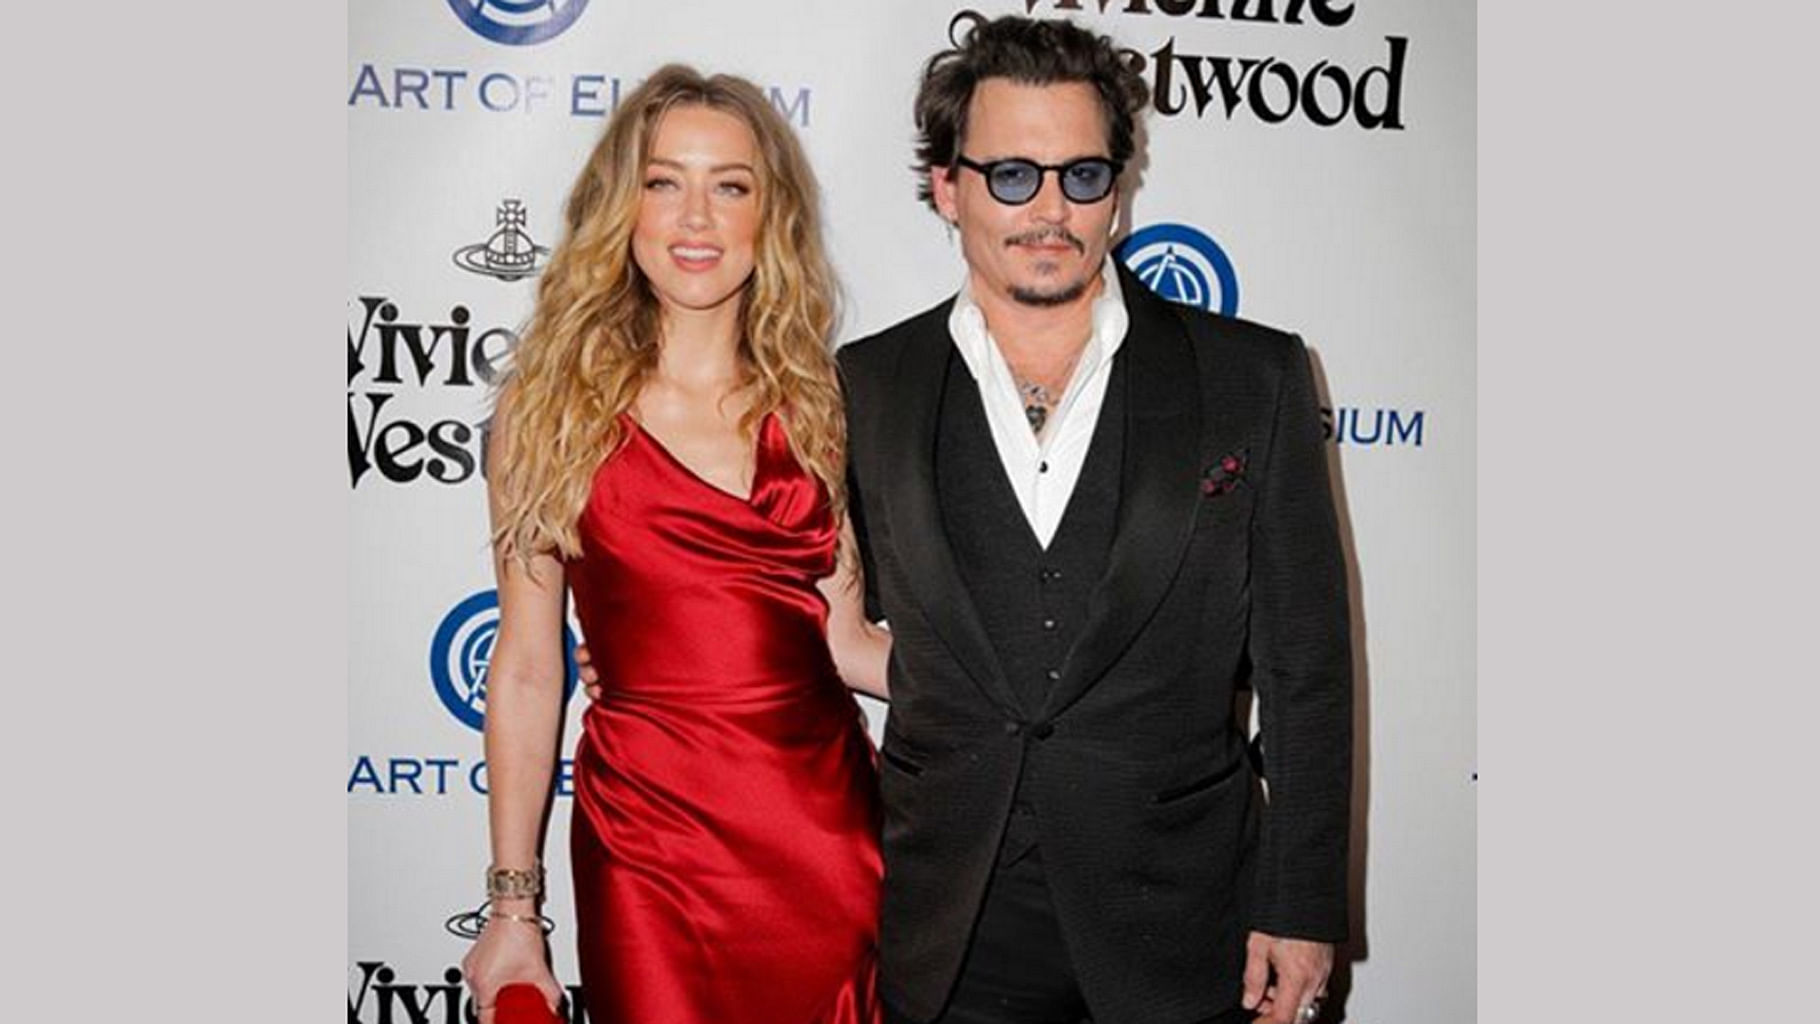 Amber Heard and Johnny Depp in happier days. (Photo Courtesy: Instagram/<a href="https://www.instagram.com/p/BHXK39ujoLD/?tagged=amberheard">Siterg</a>)